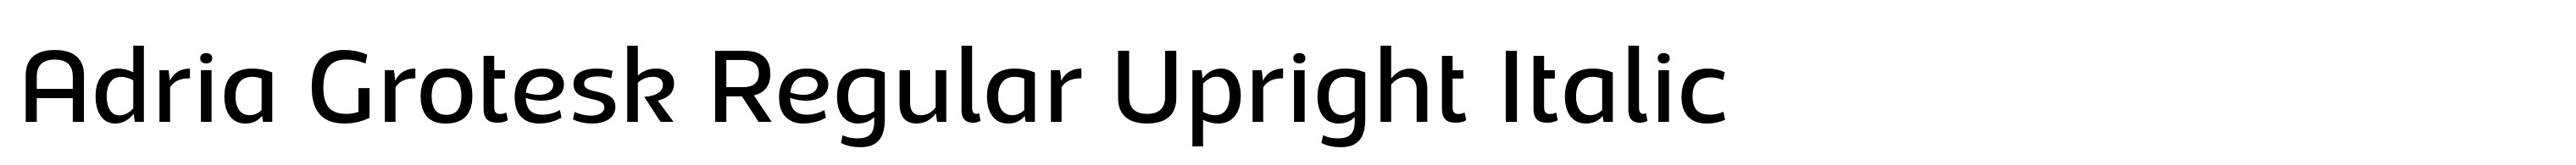 Adria Grotesk Regular Upright Italic